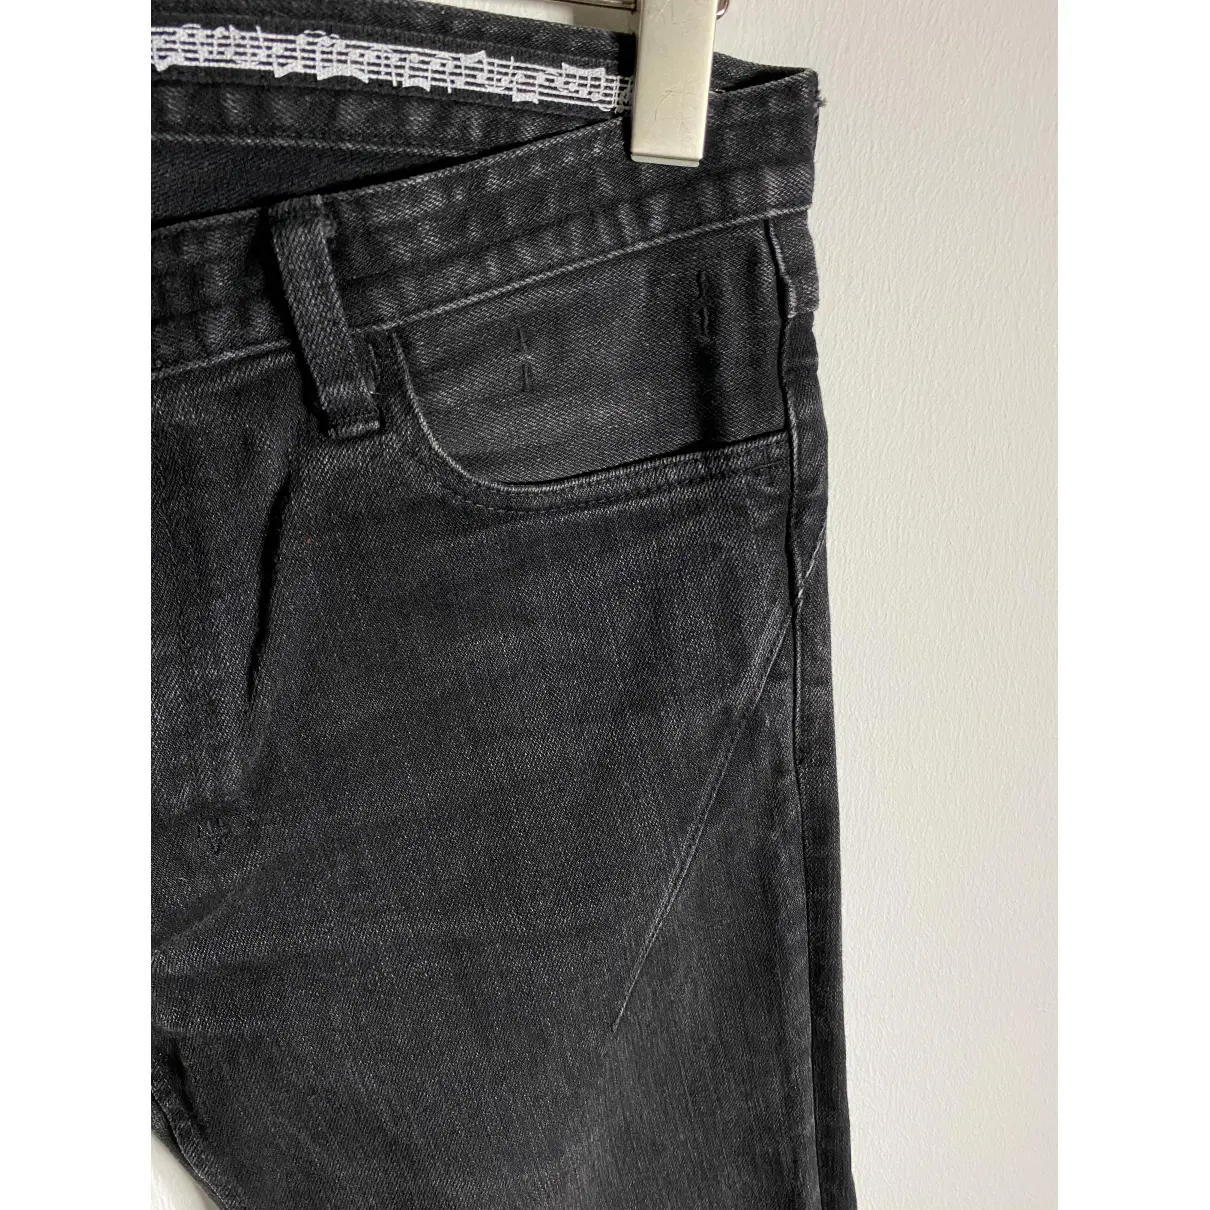 Buy Number Nine - Takahiro Miyashita Black Cotton Jeans online - Vintage